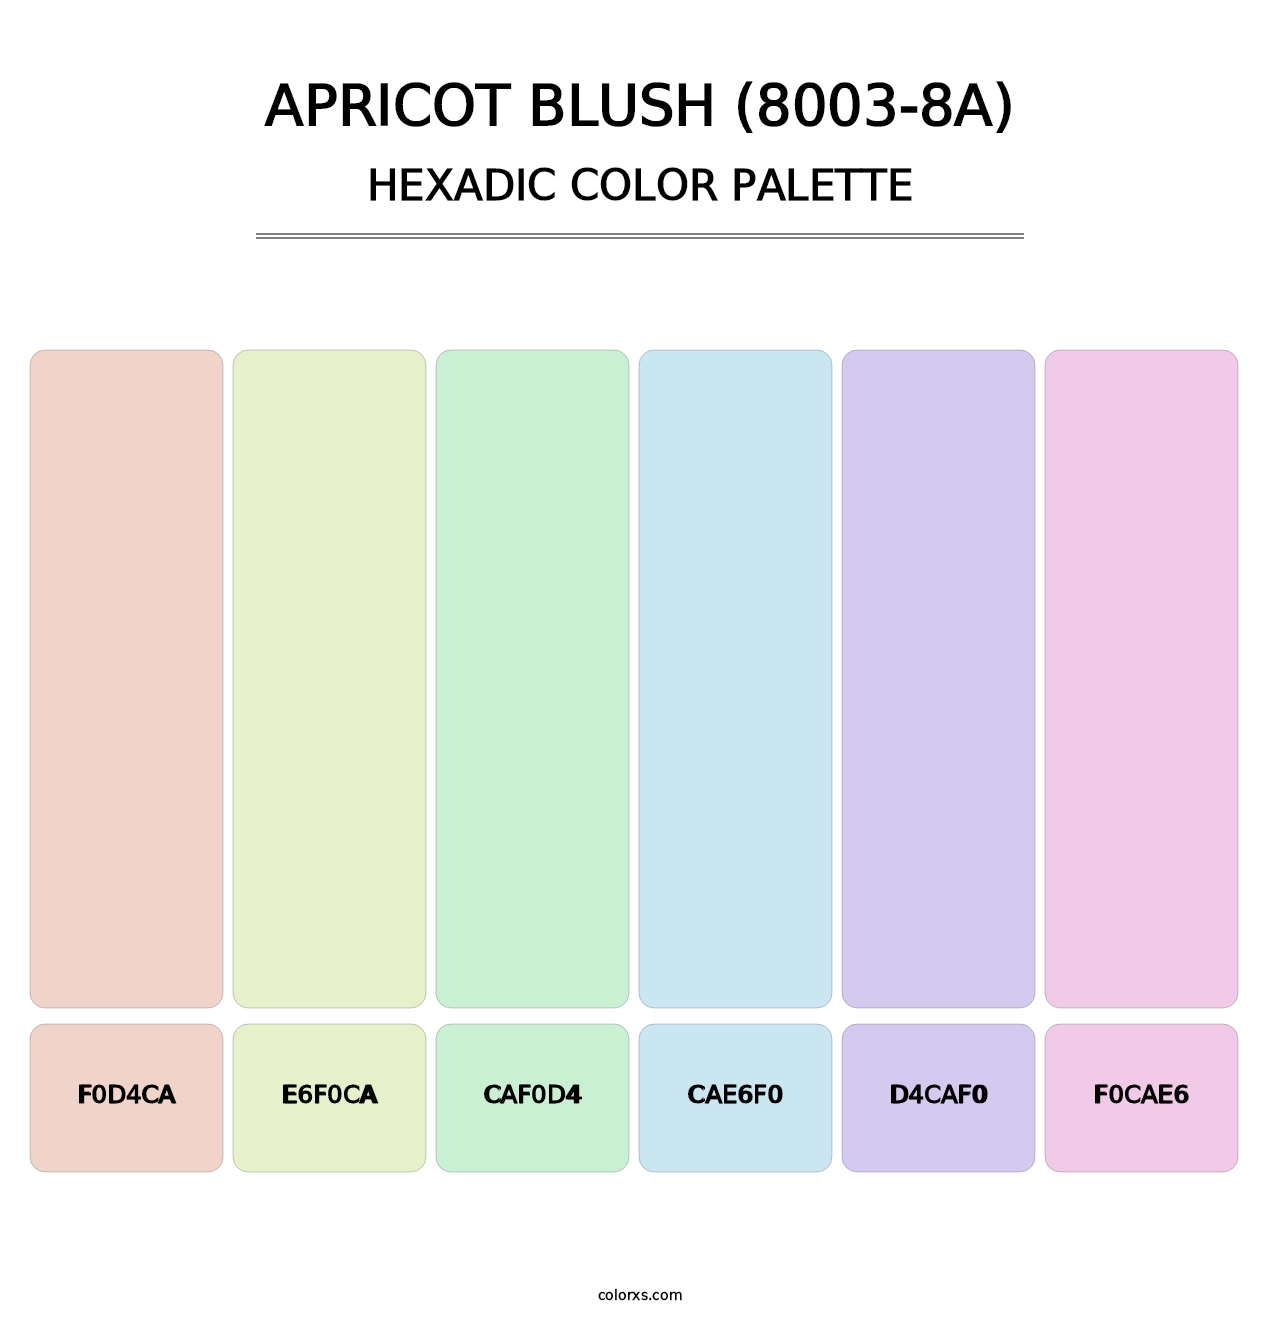 Apricot Blush (8003-8A) - Hexadic Color Palette